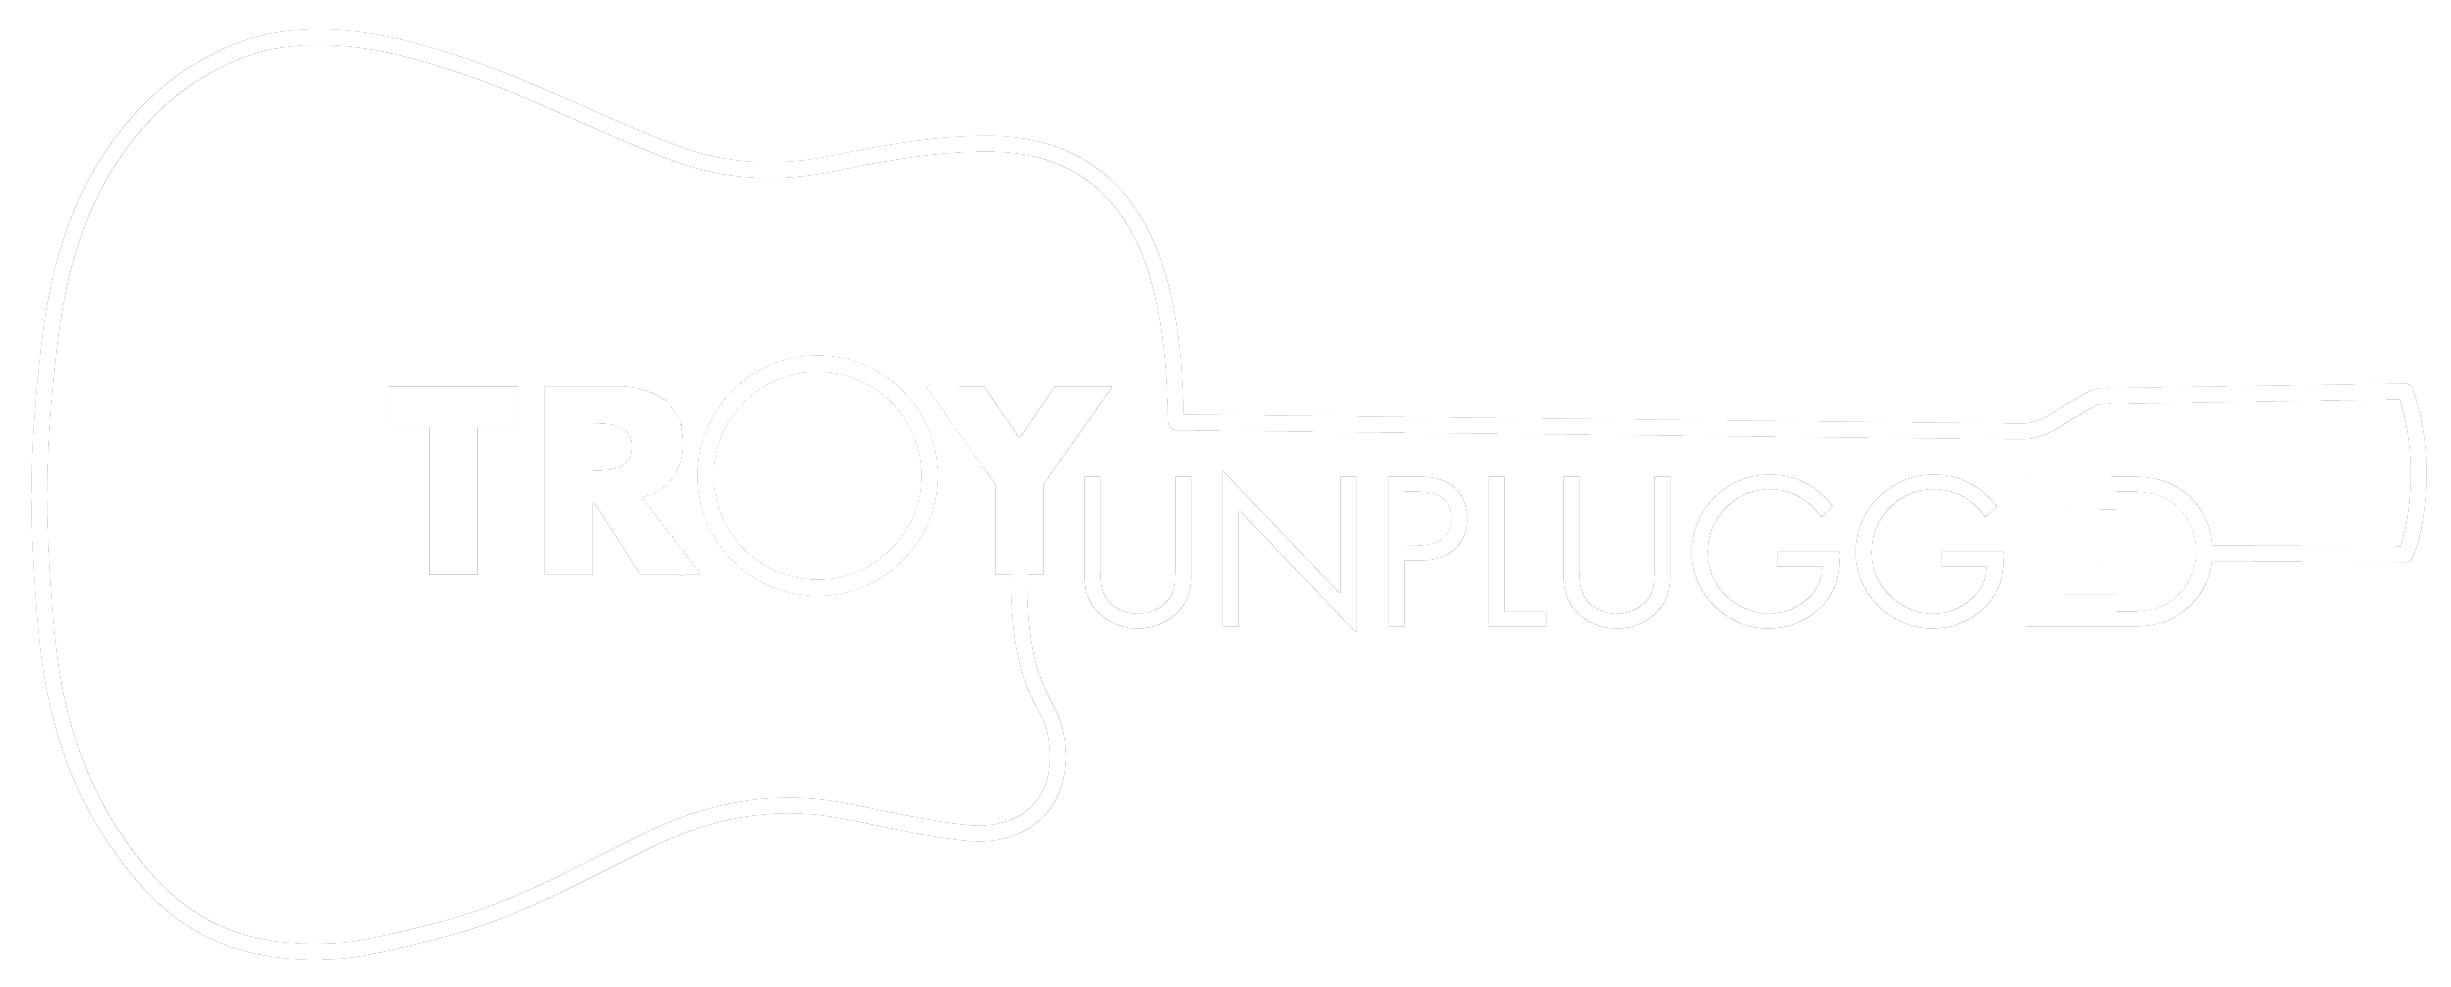 TroyUnplugged